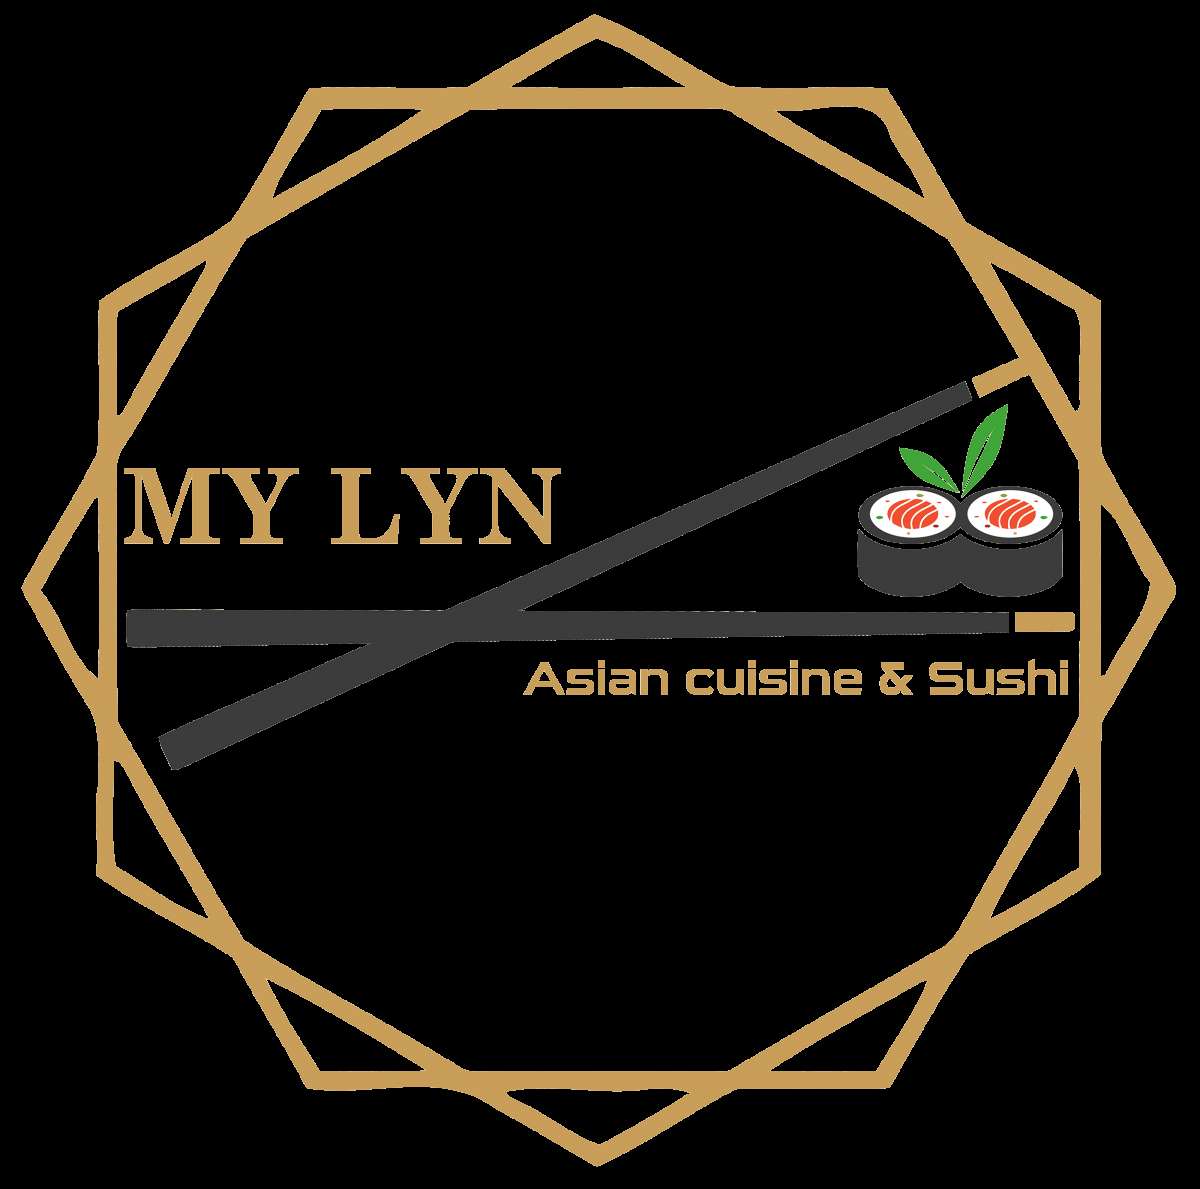 My Lyn Restaurant - Baden-Baden - Administrative Unterstützung